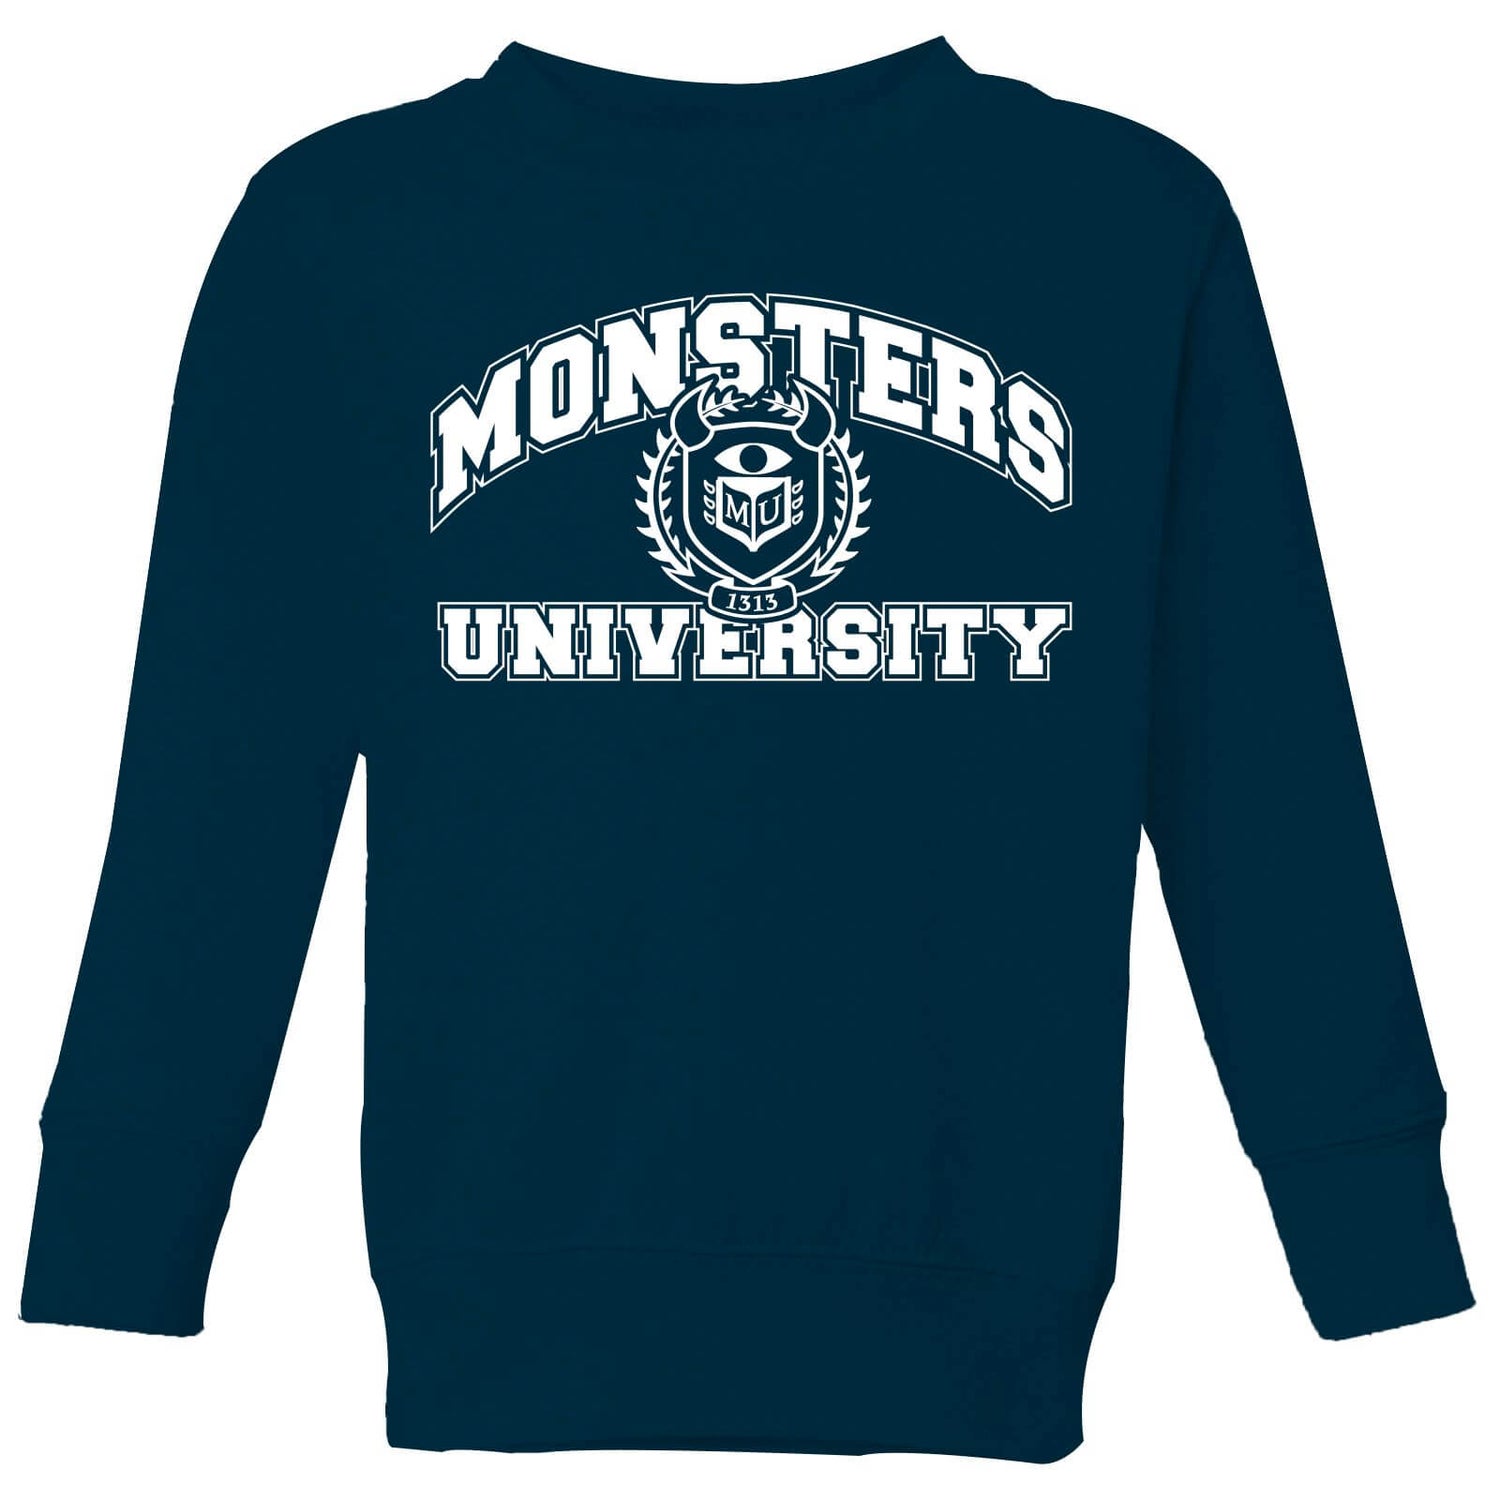 Monsters Inc. Monsters University Student Kids' Sweatshirt - Navy